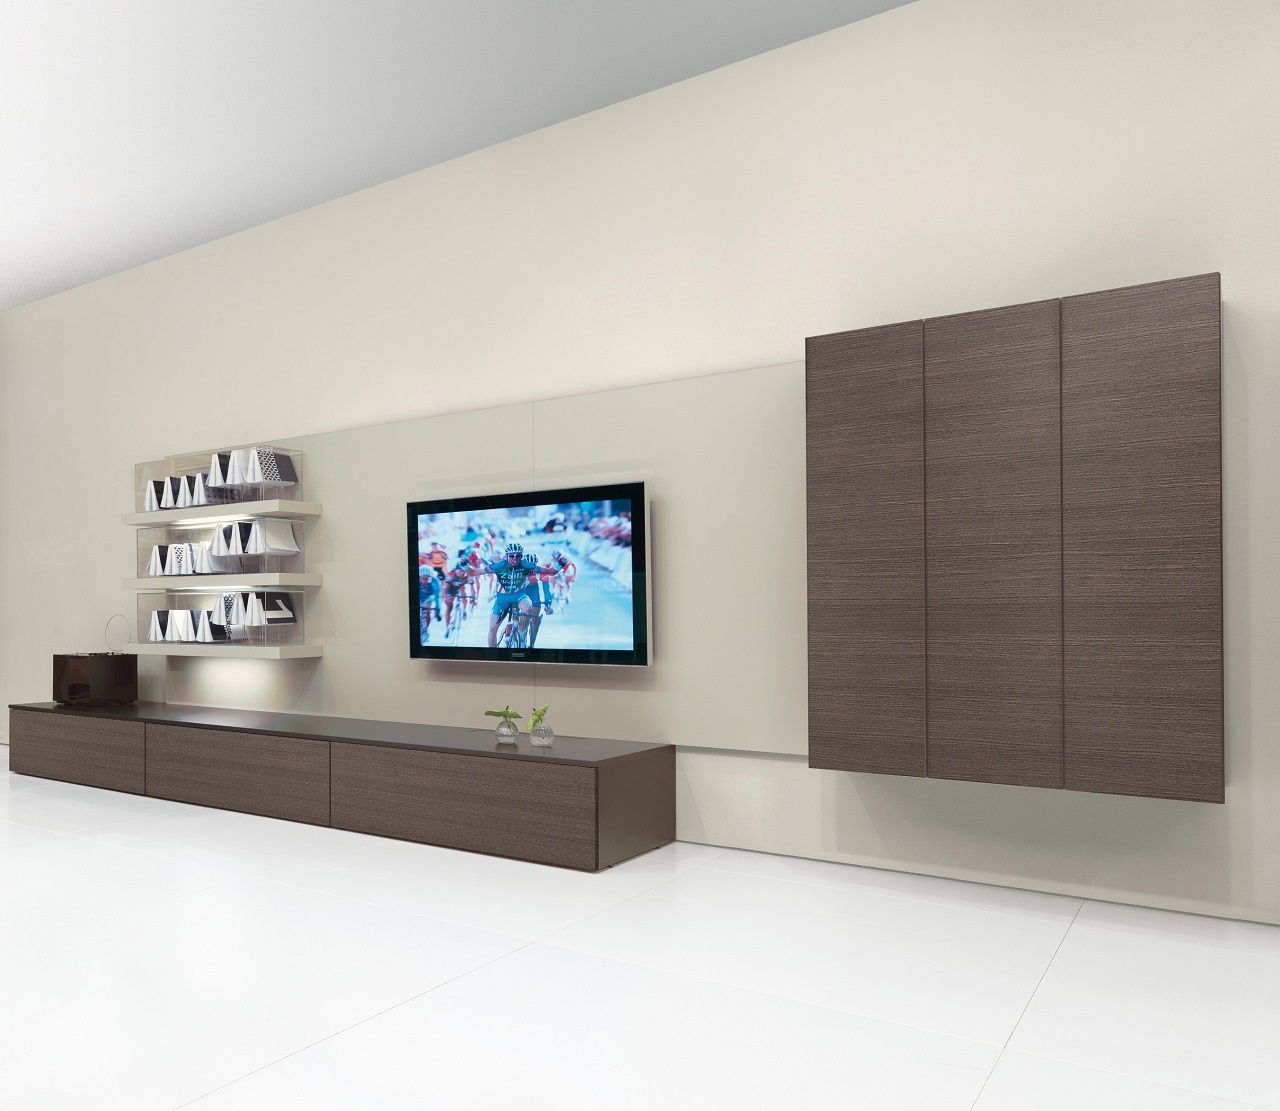 Inspiring minimalist modern living room with tv